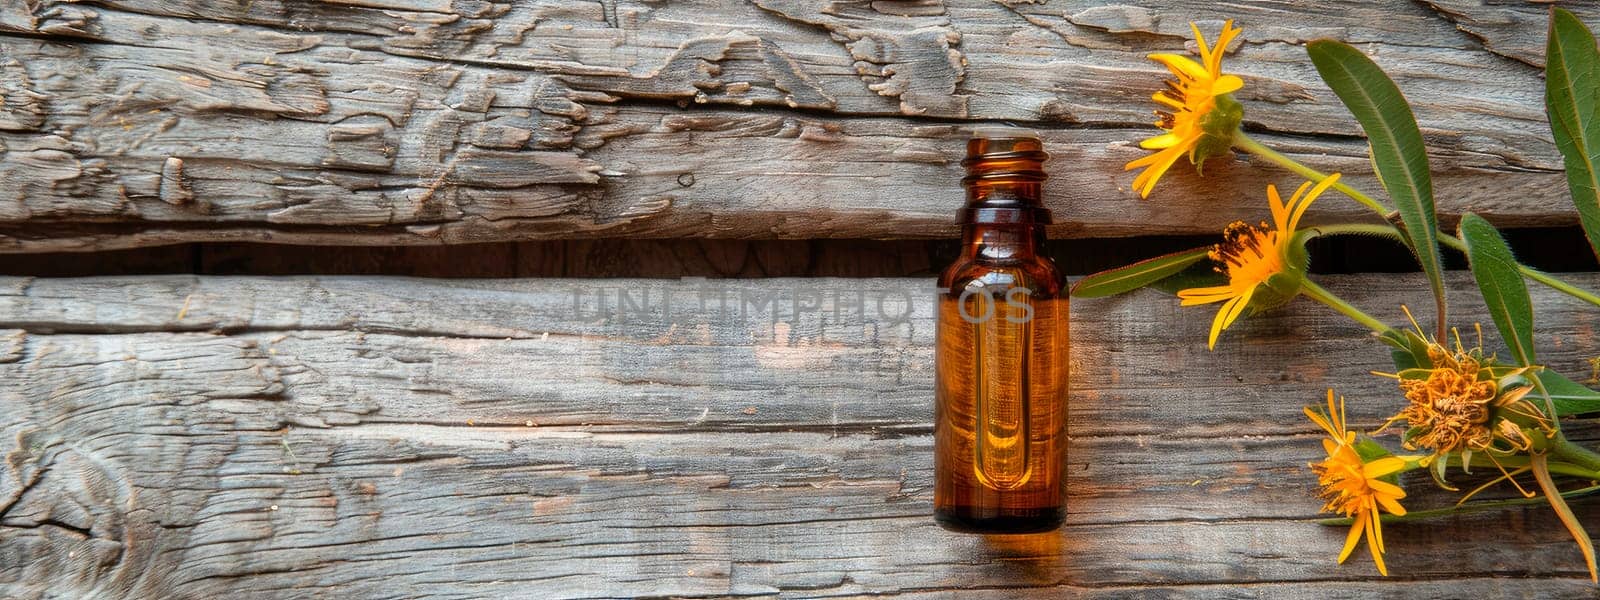 elecampane essential oil in a bottle. Selective focus. by yanadjana